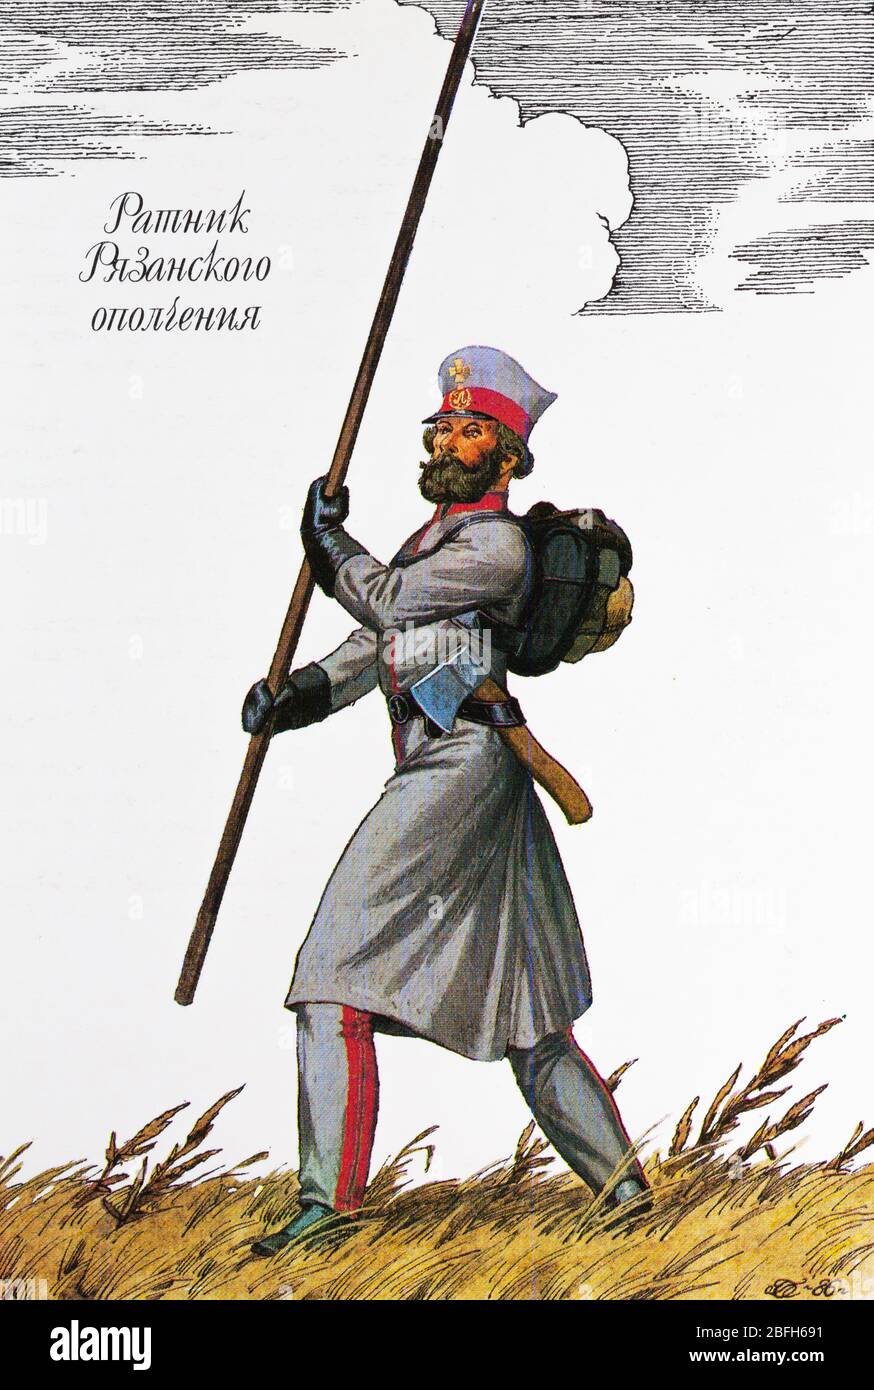 Soldier of Ryazan regiment, 1812, 19th century Russian army uniform, Russia Stock Photo